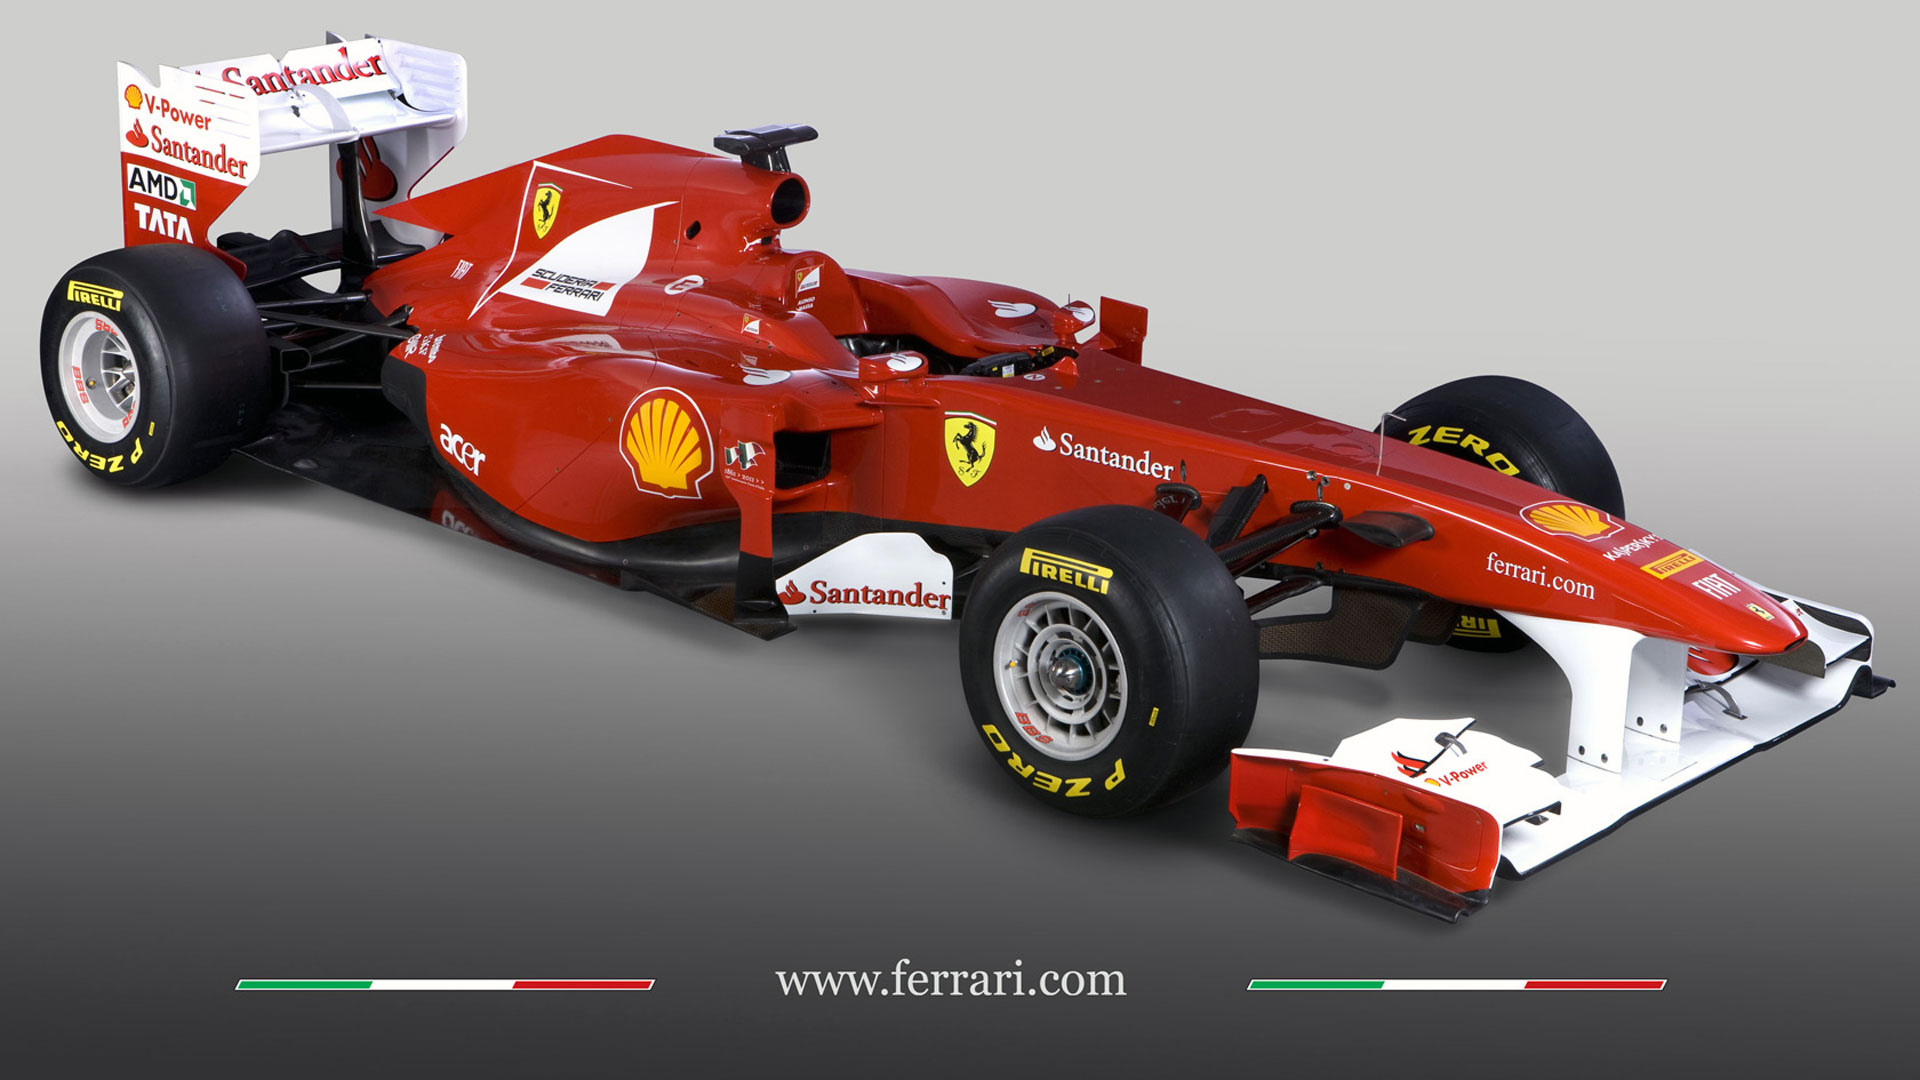 Ferrari F150 2011 sports car racing on a track.